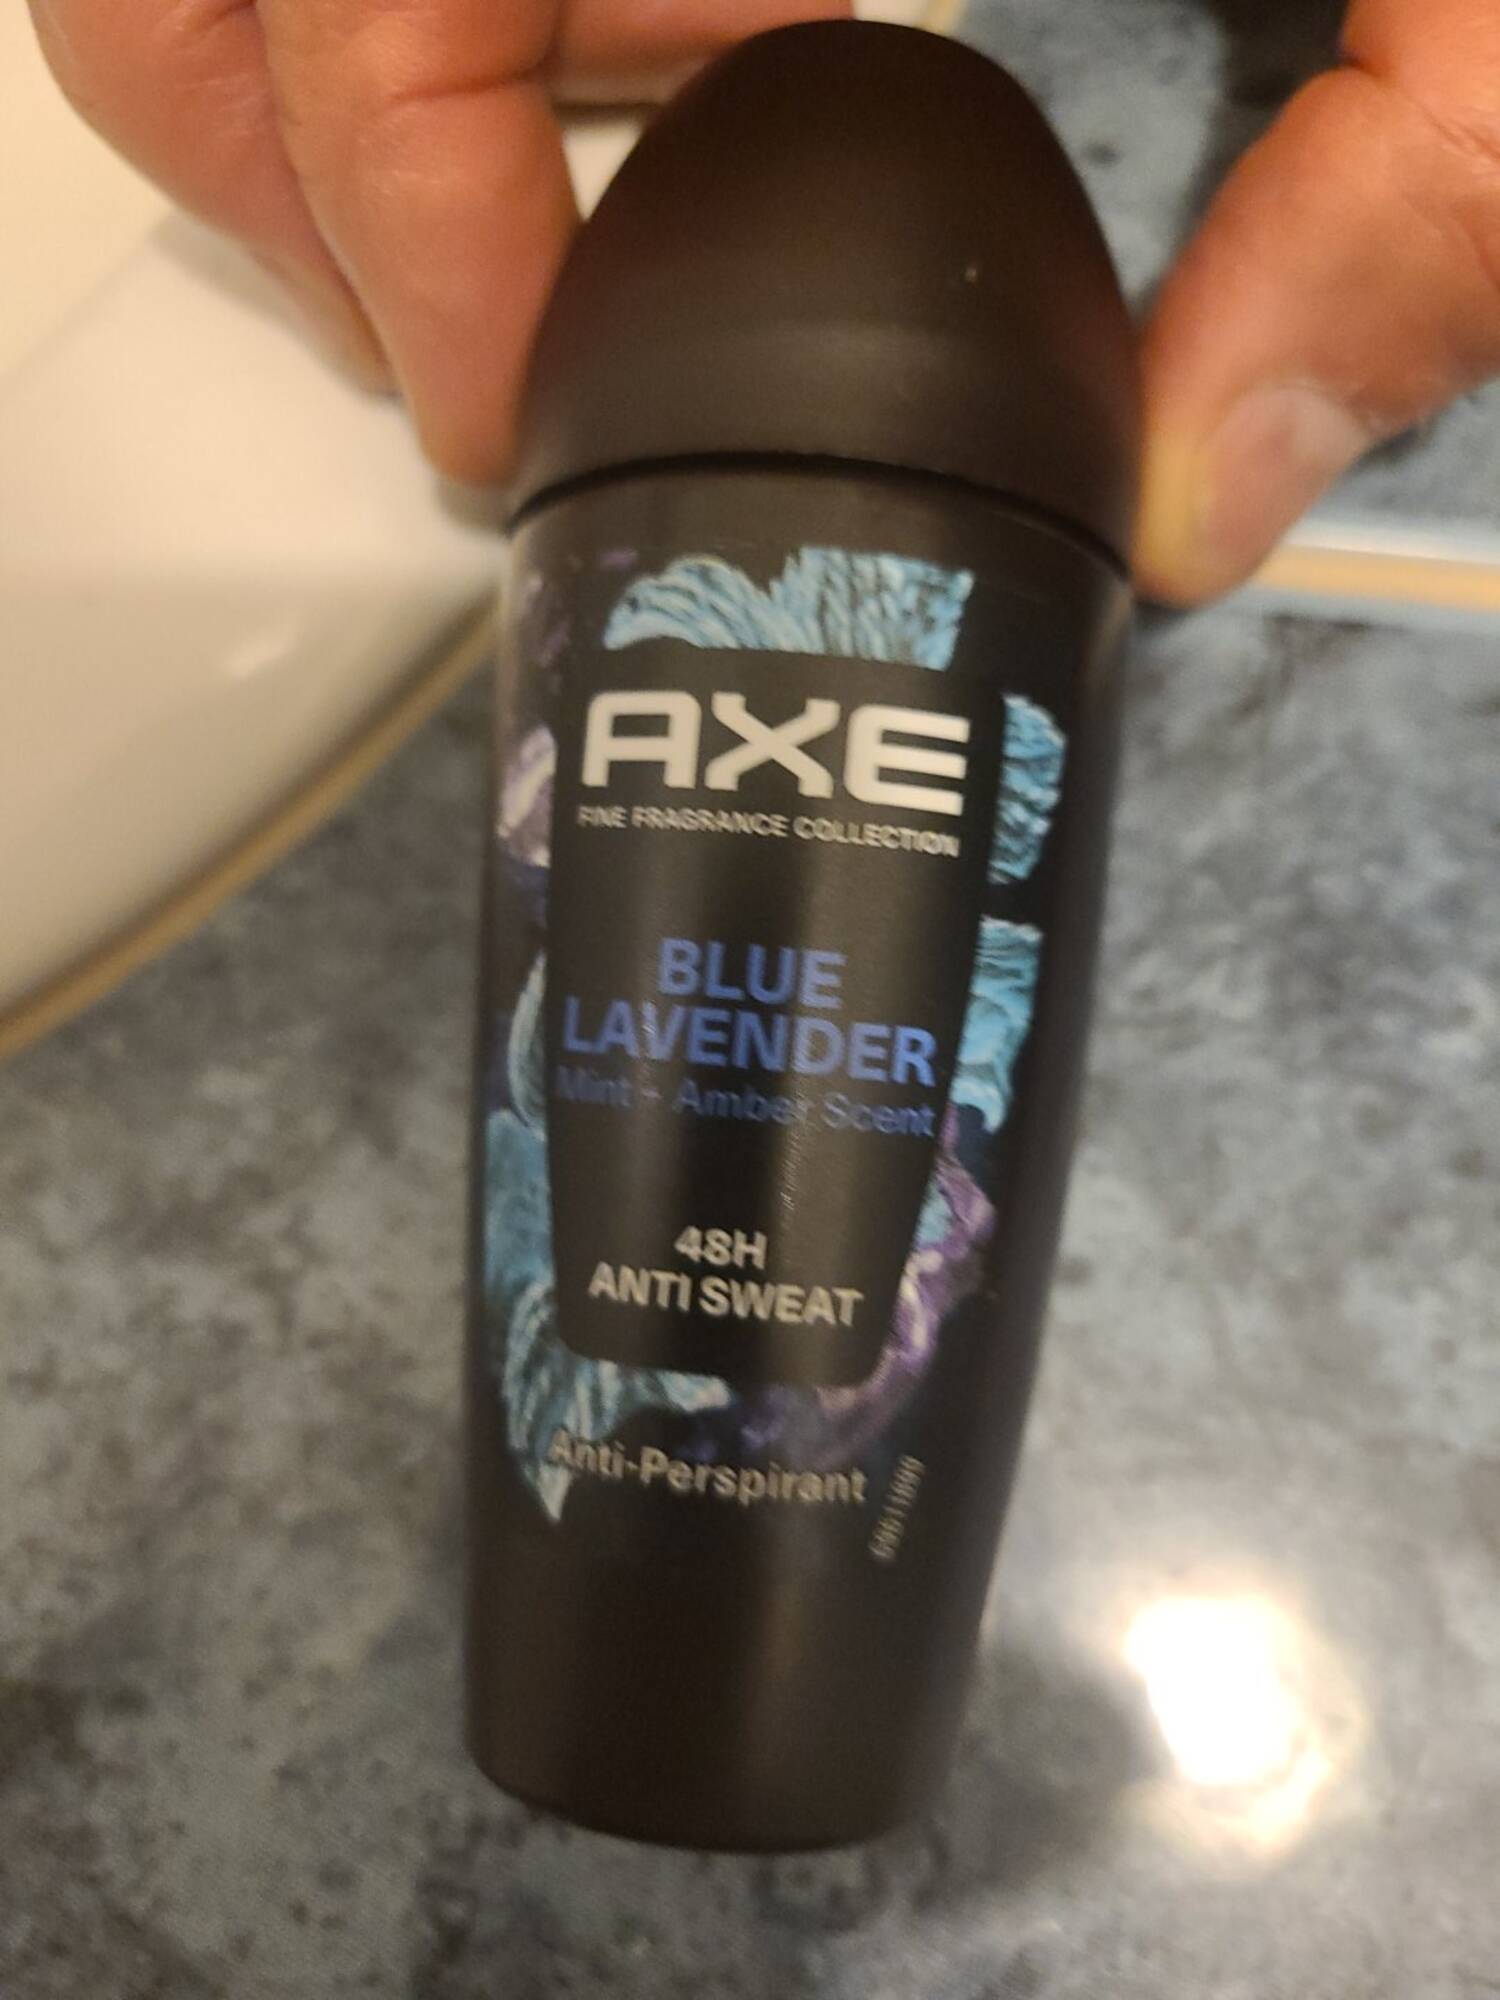 AXE - Blue lavender - Anti perspirant 48h